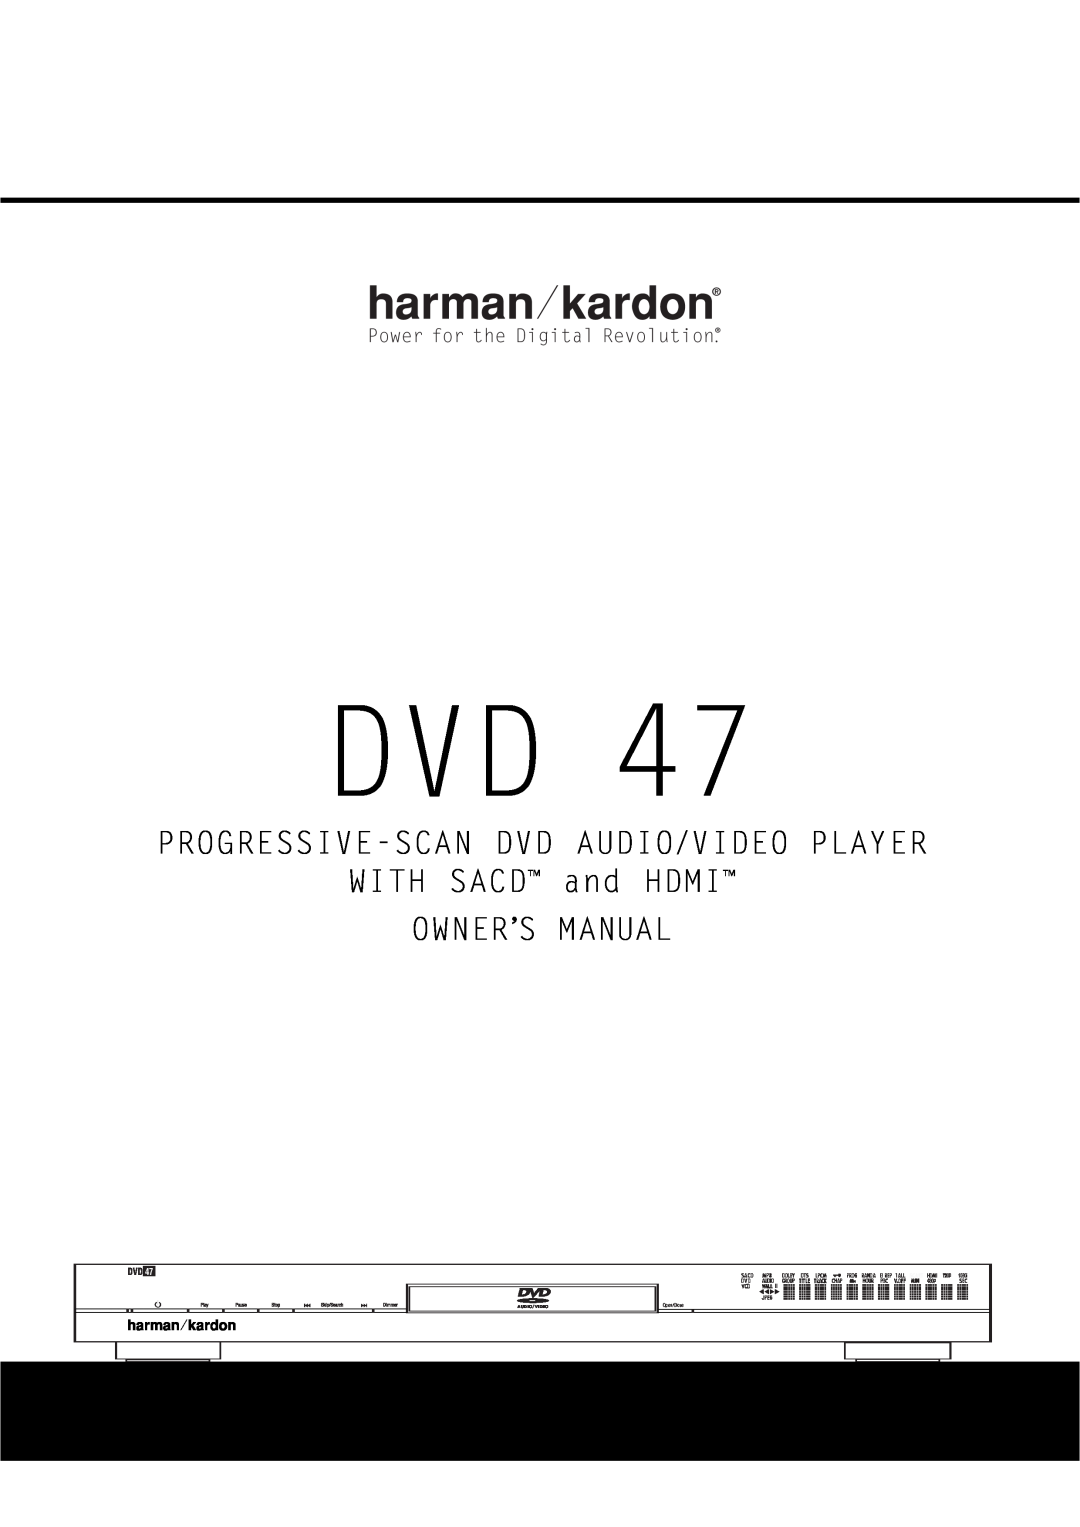 Harman-Kardon DVD47 owner manual Progressive-Scandvd Audio/Video Player, Power for the Digital Revolution, Open/Close 